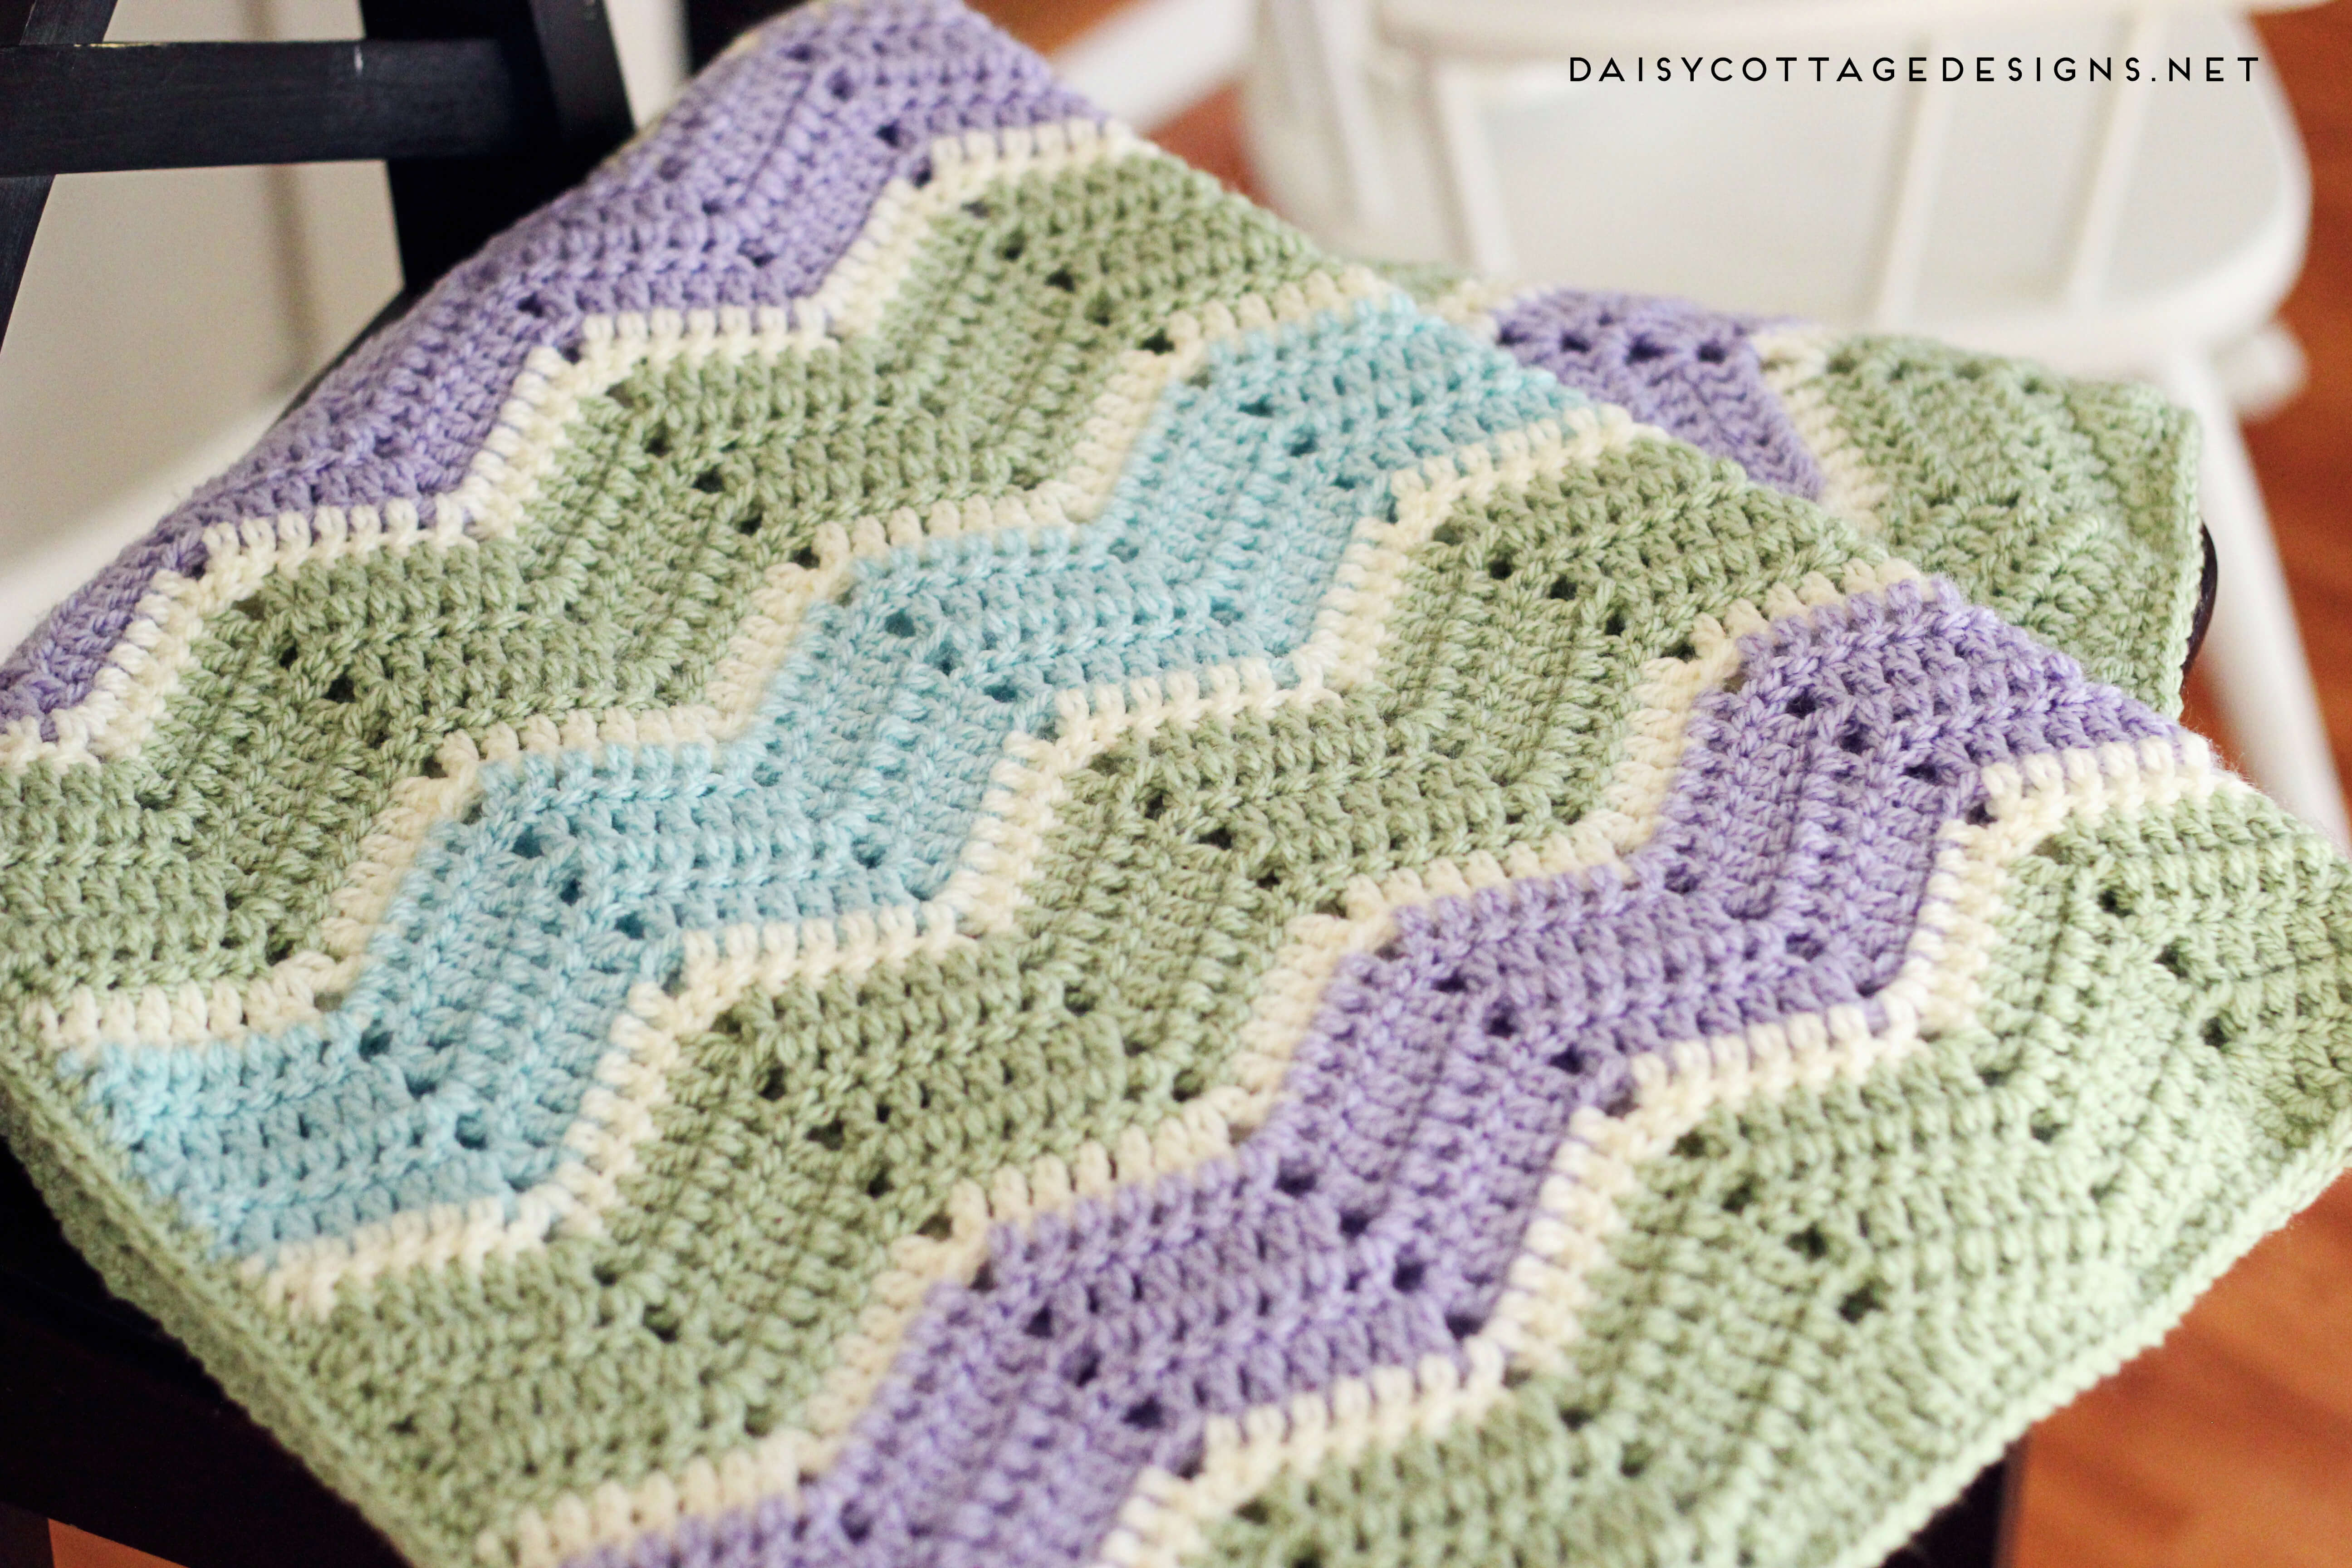 Simple Crochet Afghan Patterns Ripple Blanket Crochet Pattern Daisy Cottage Designs